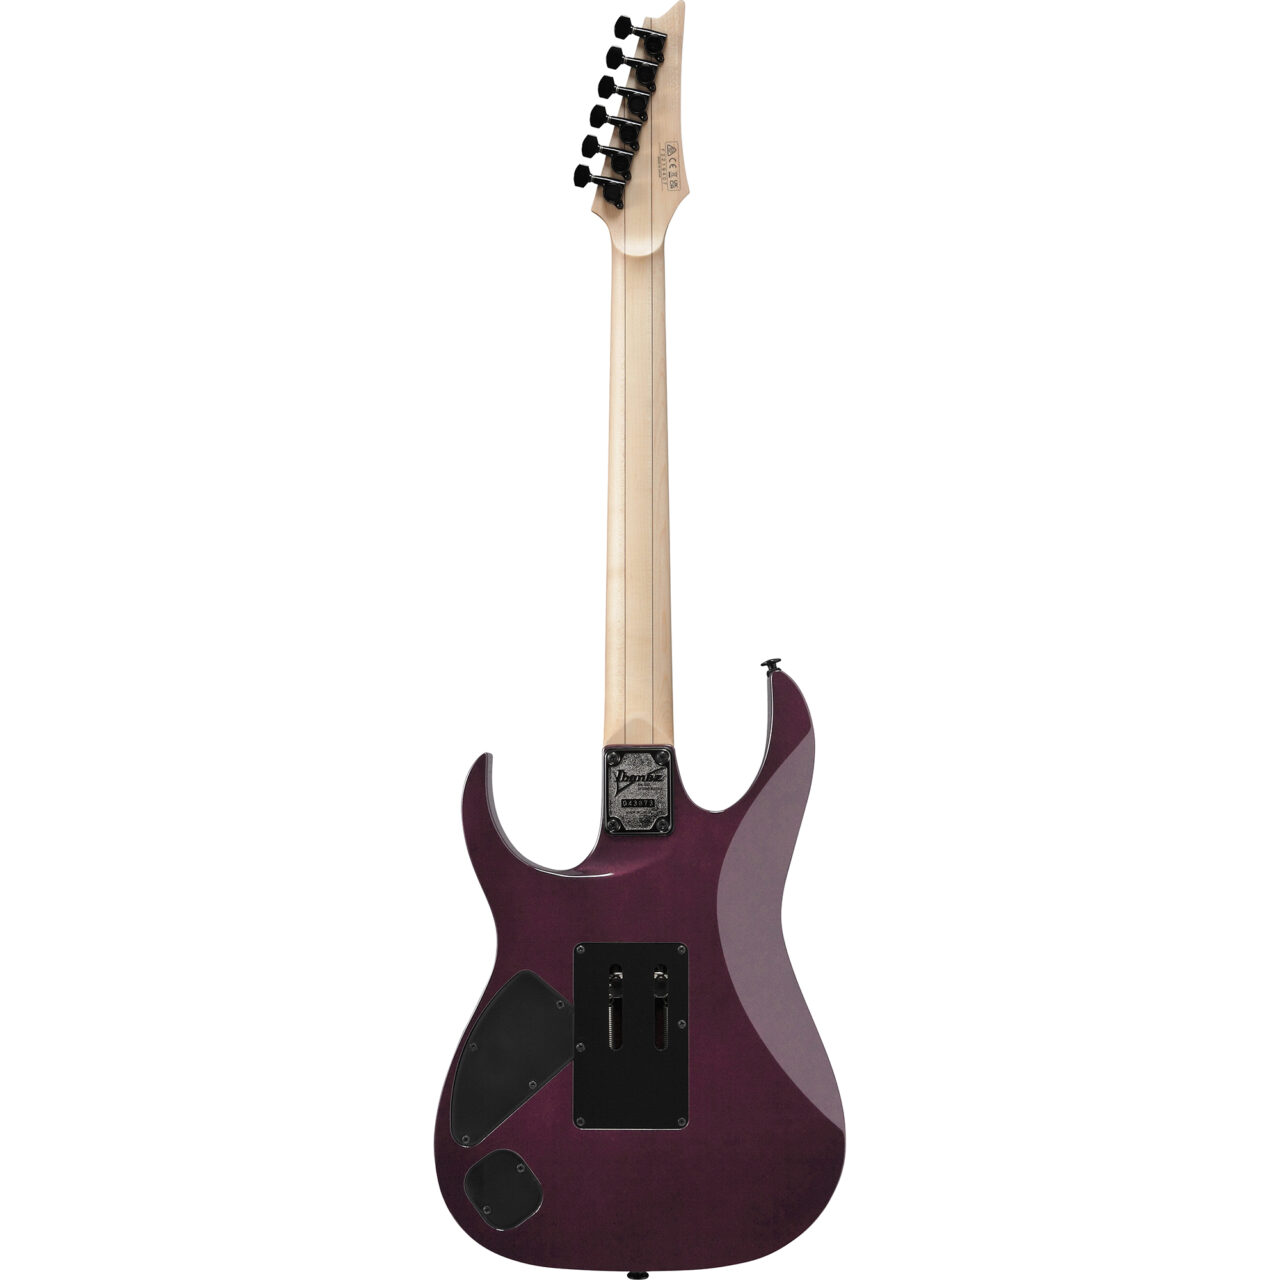 Ibanezエレキギター 限定新製品 RG565x2色 発売